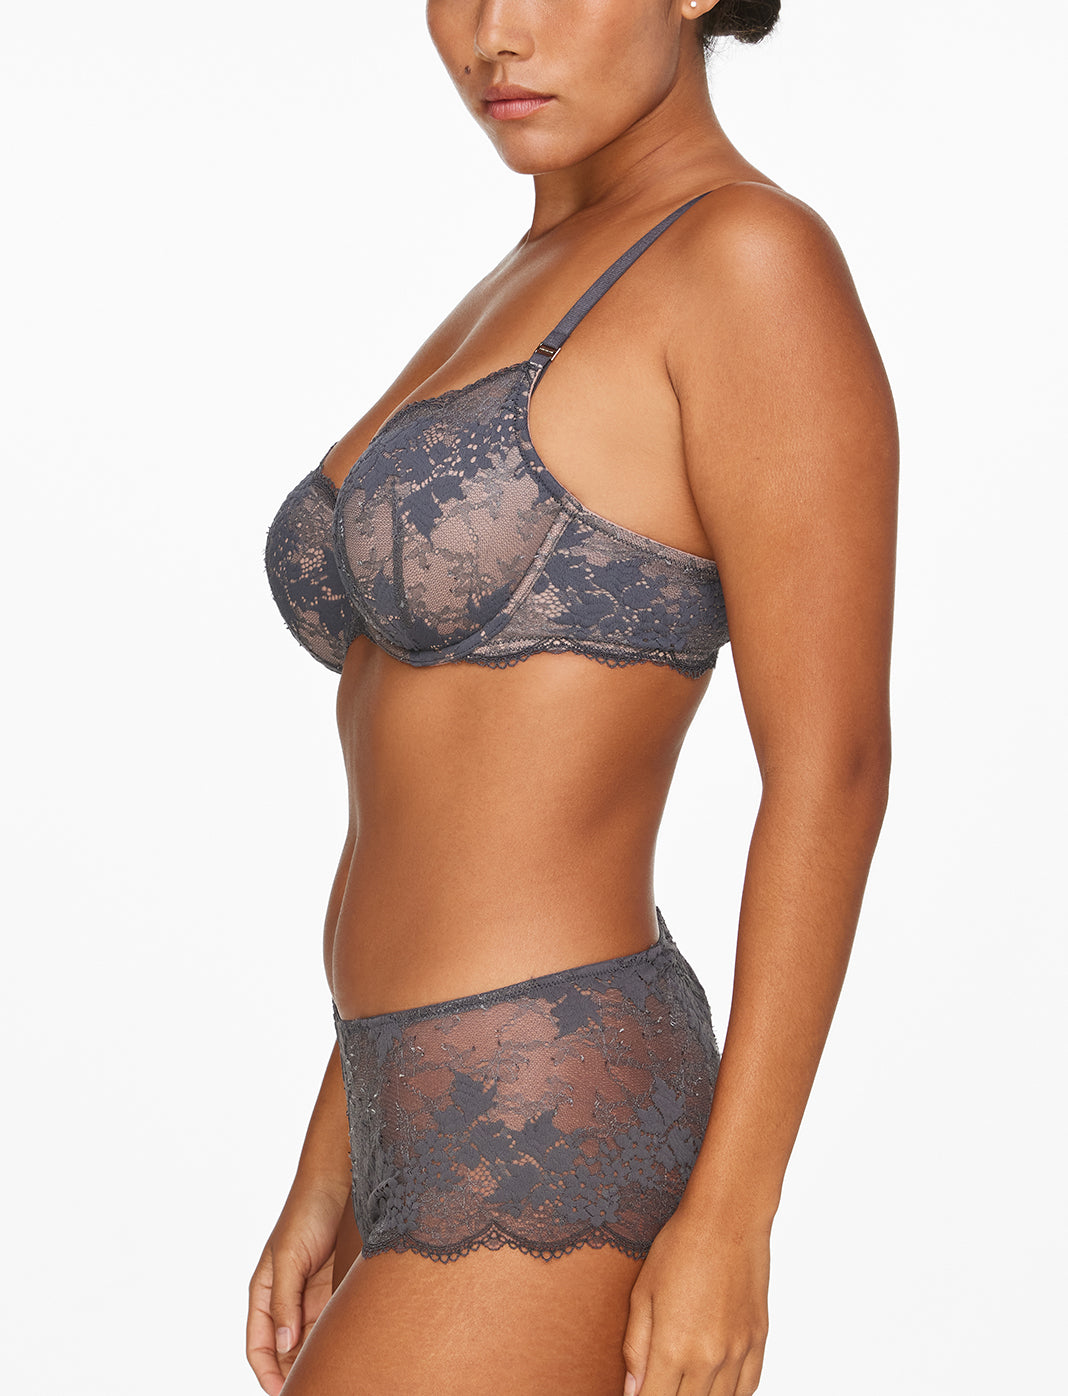 Wholesale 42 bra size For Supportive Underwear 